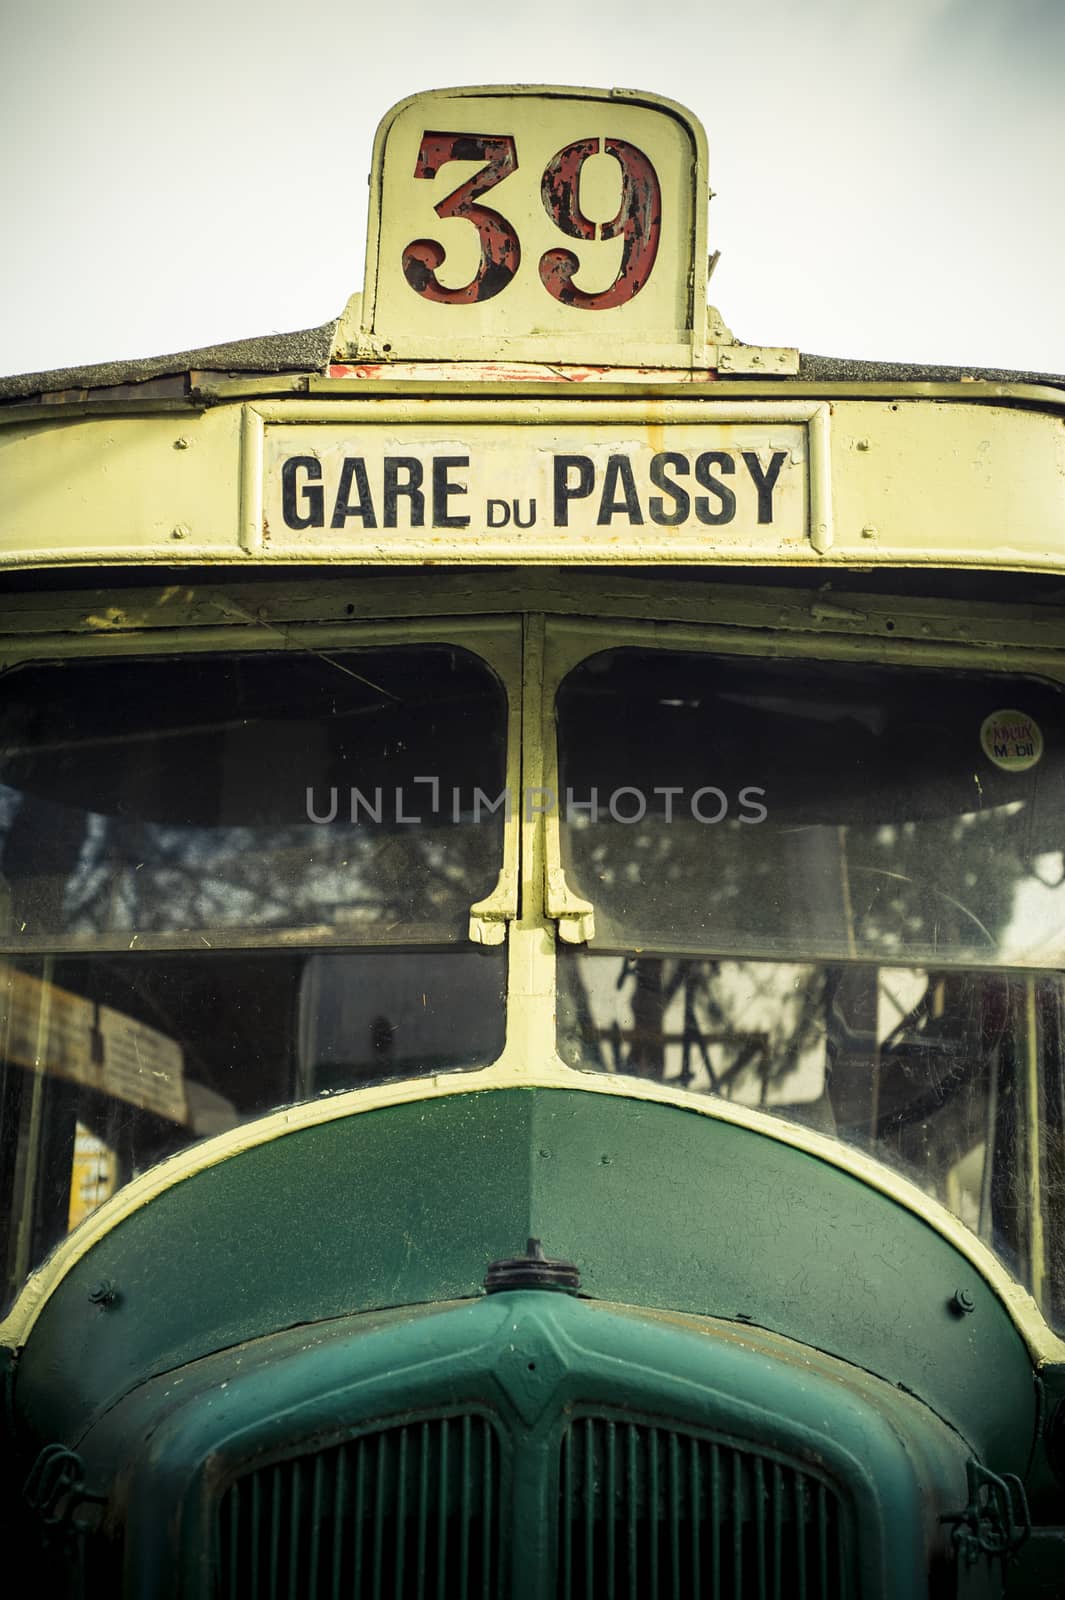 old Parisian tram with tourist destinations in Paris